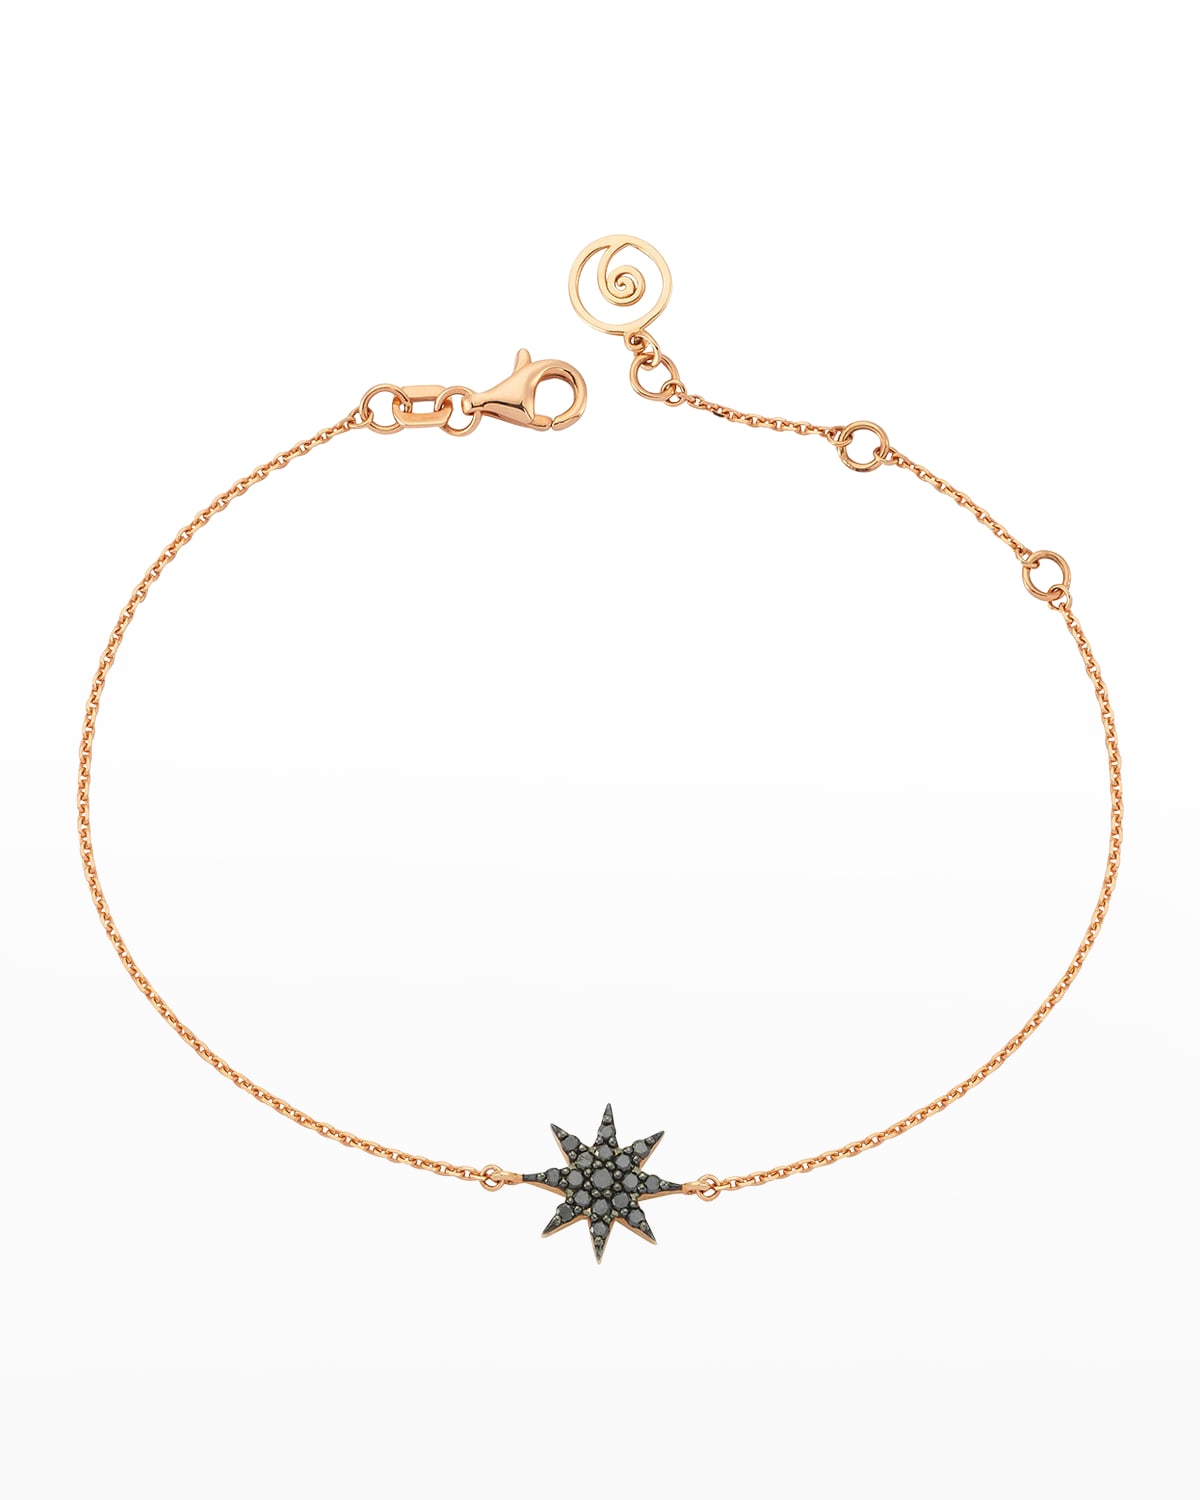 Venus Star Black Diamond Bracelet